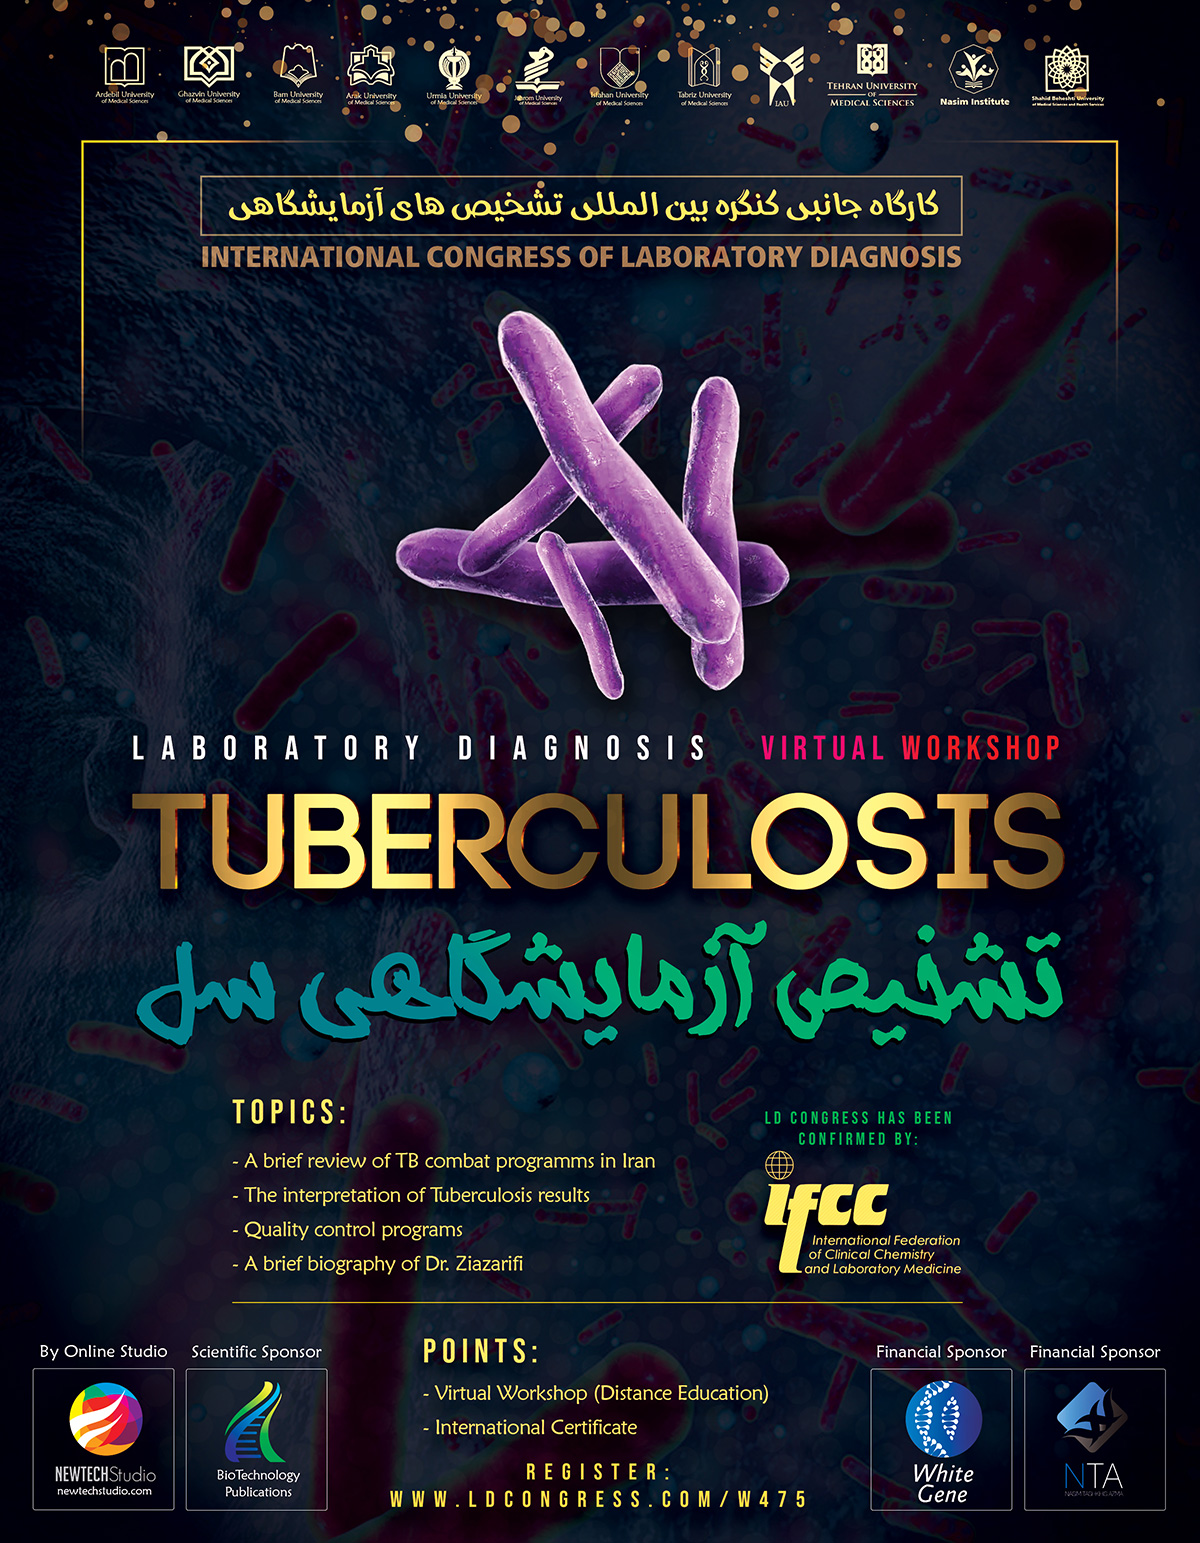 Laboratory Diagnosis of Tuberculosis